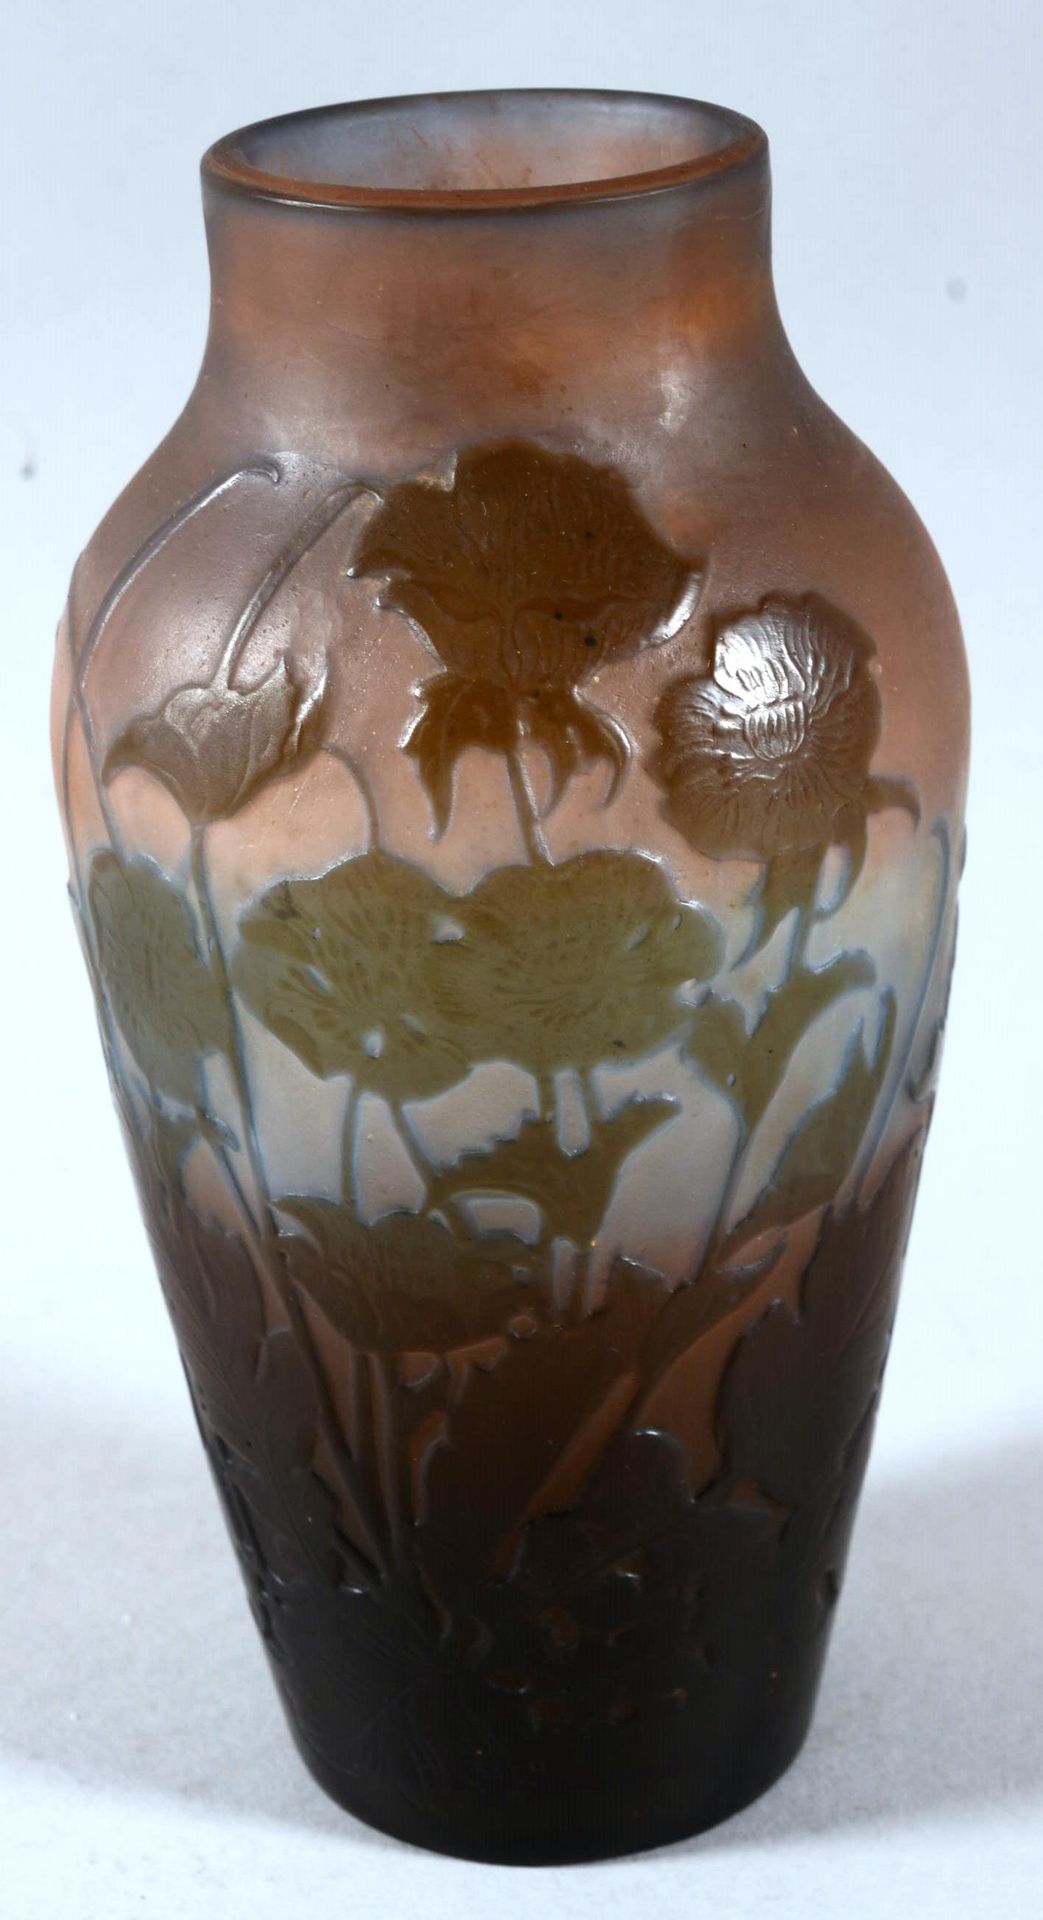 Emile Galle vase Emile GALLÉ (1846-1904)

Multi-layered glass vase with acid-etc&hellip;